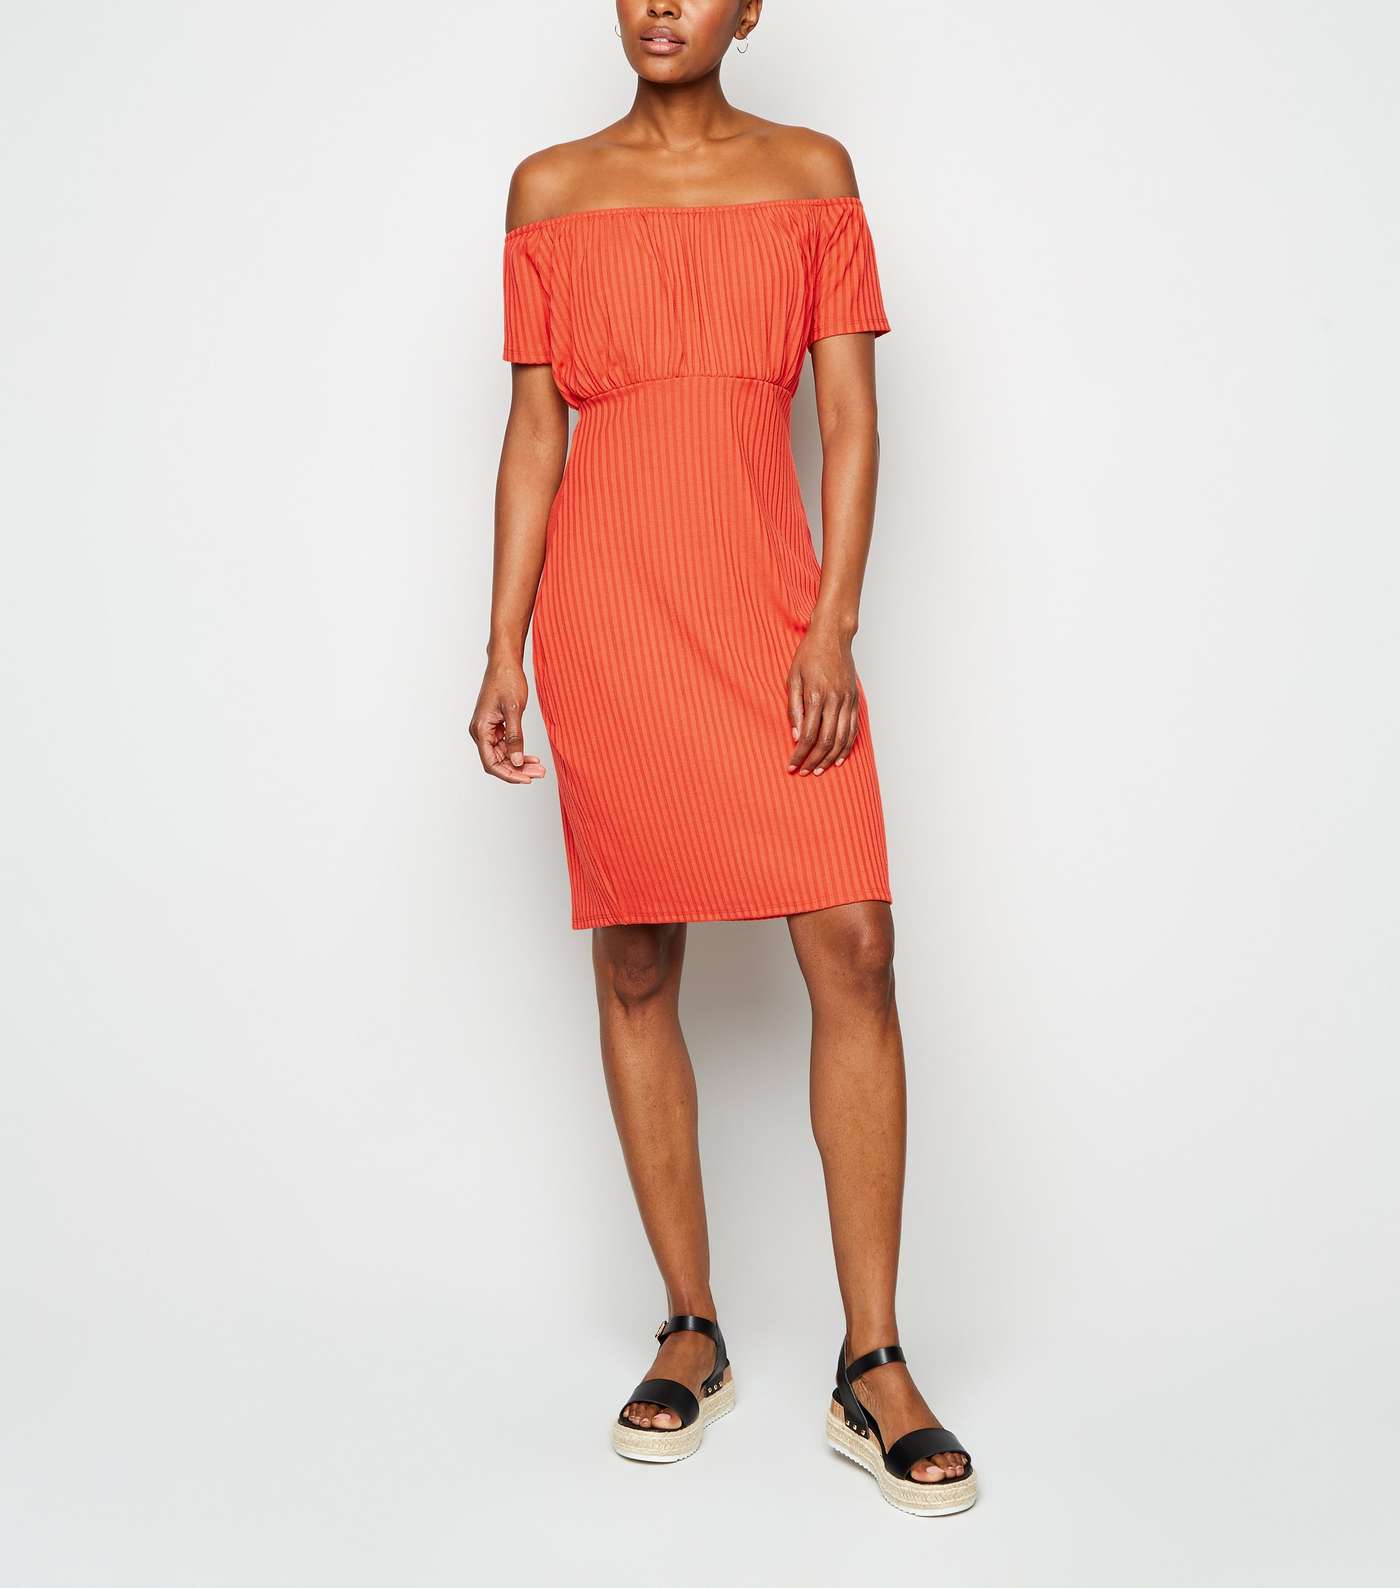 Apricot Bright Orange Ribbed Bardot Dress Image 2